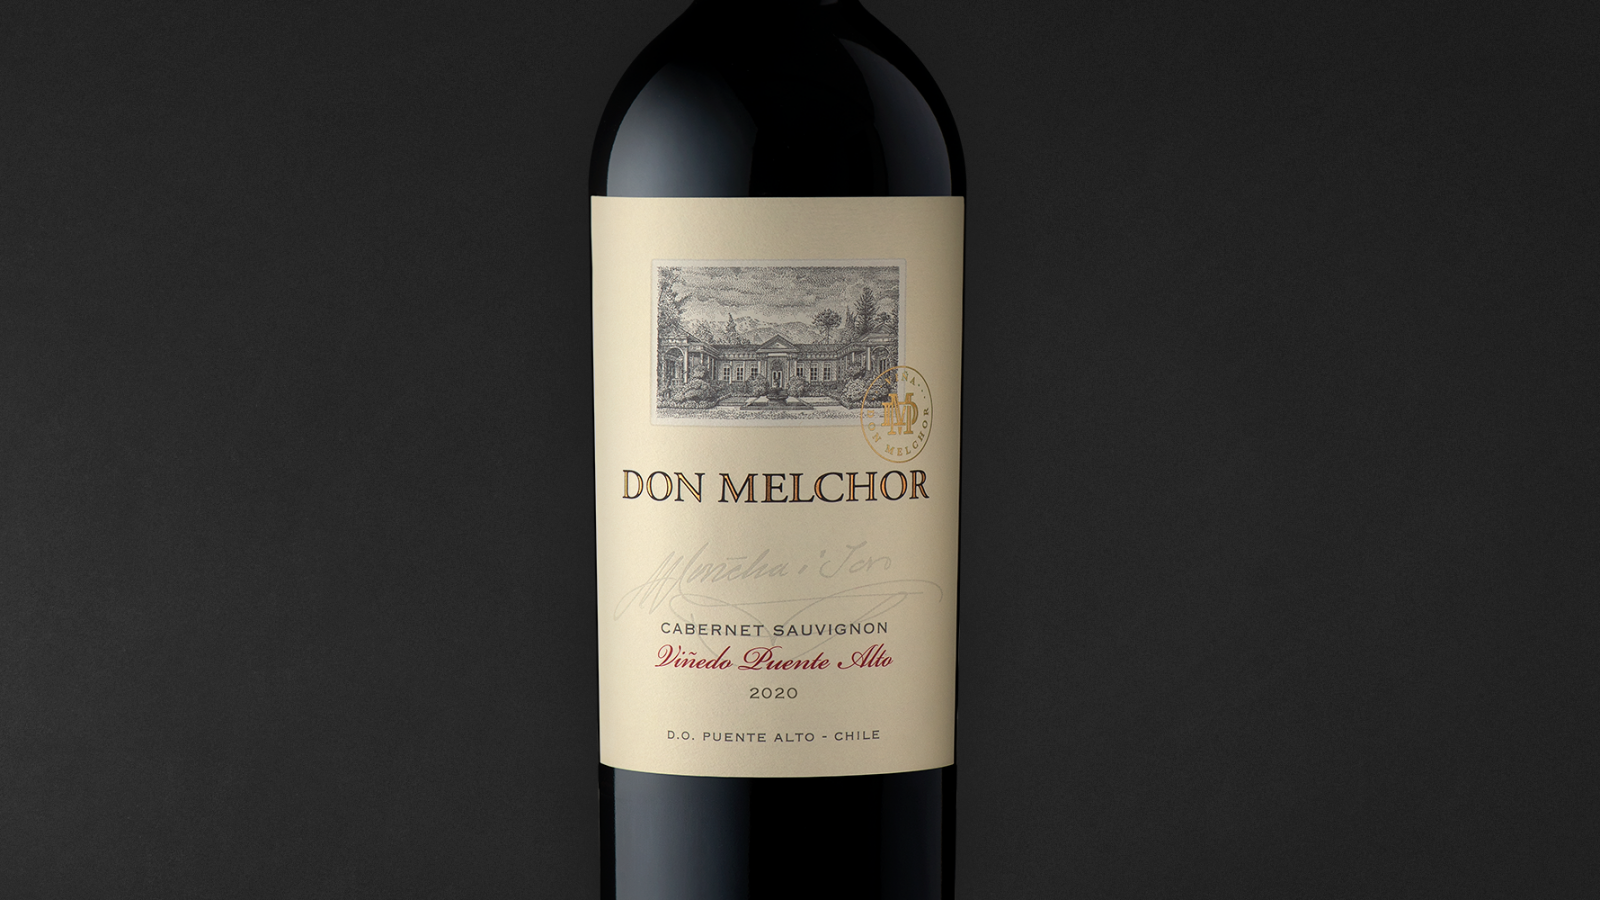 House Image of Mejores Vinos Chilenos: Don Melchor 2020 - Cabernet Sauvignon, un vino destacado entre los Mejores del Mundo